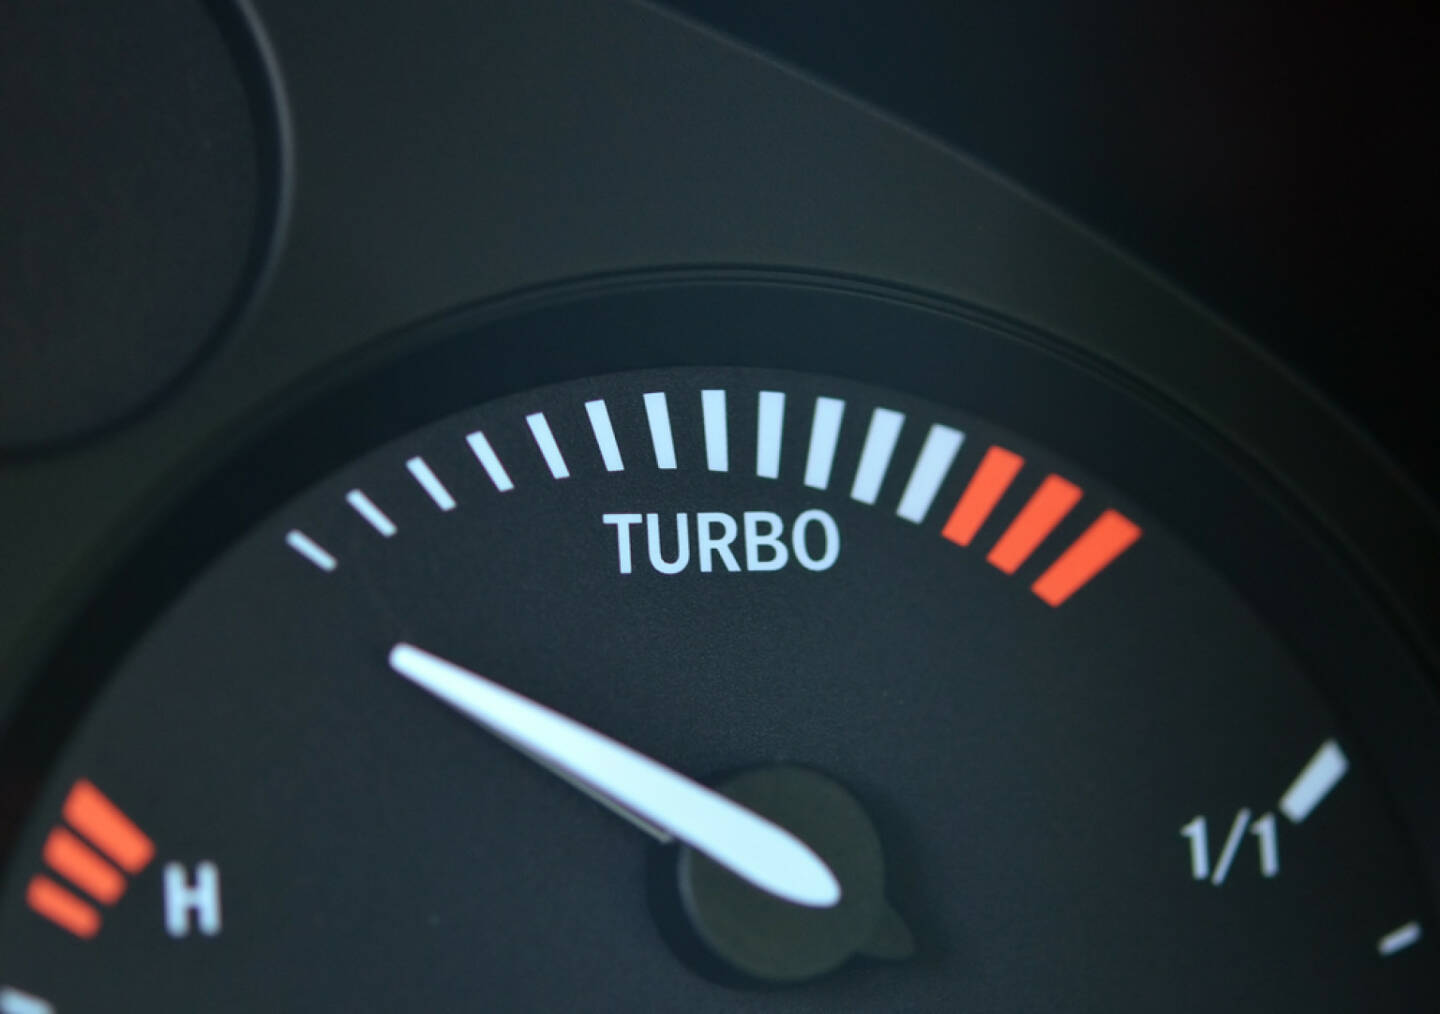 Turbo, Turbos http://www.shutterstock.com/de/pic-78945556/stock-photo-turbo-boost-indicator.html (Bild: shutterstock.com)